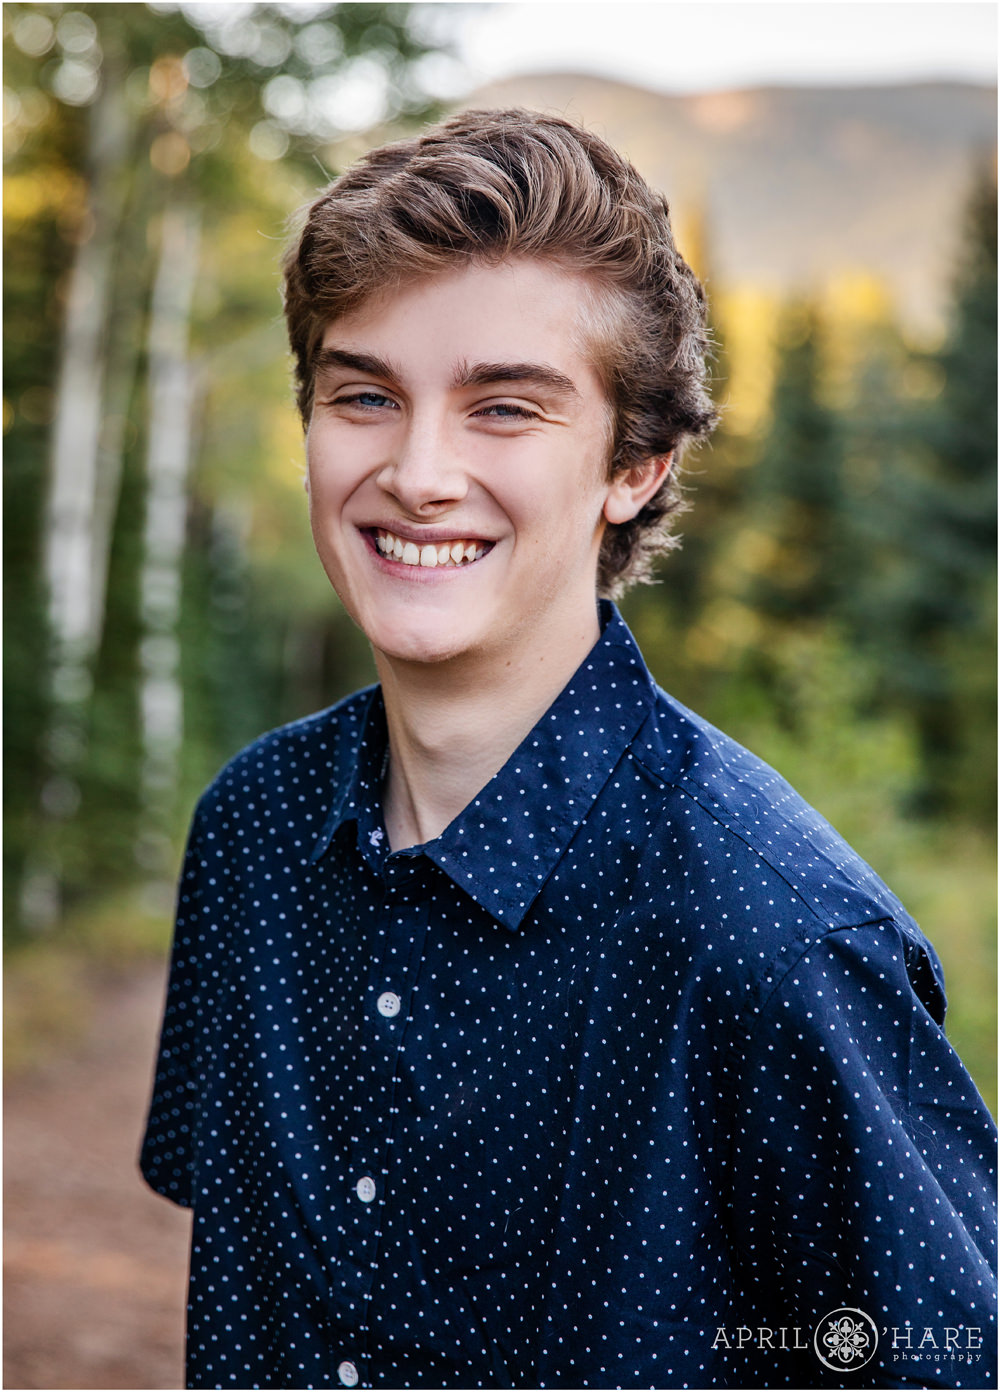 High School boy portrait in Evergreen Colorado wearing a short sleeved dark blue polka dot shirt